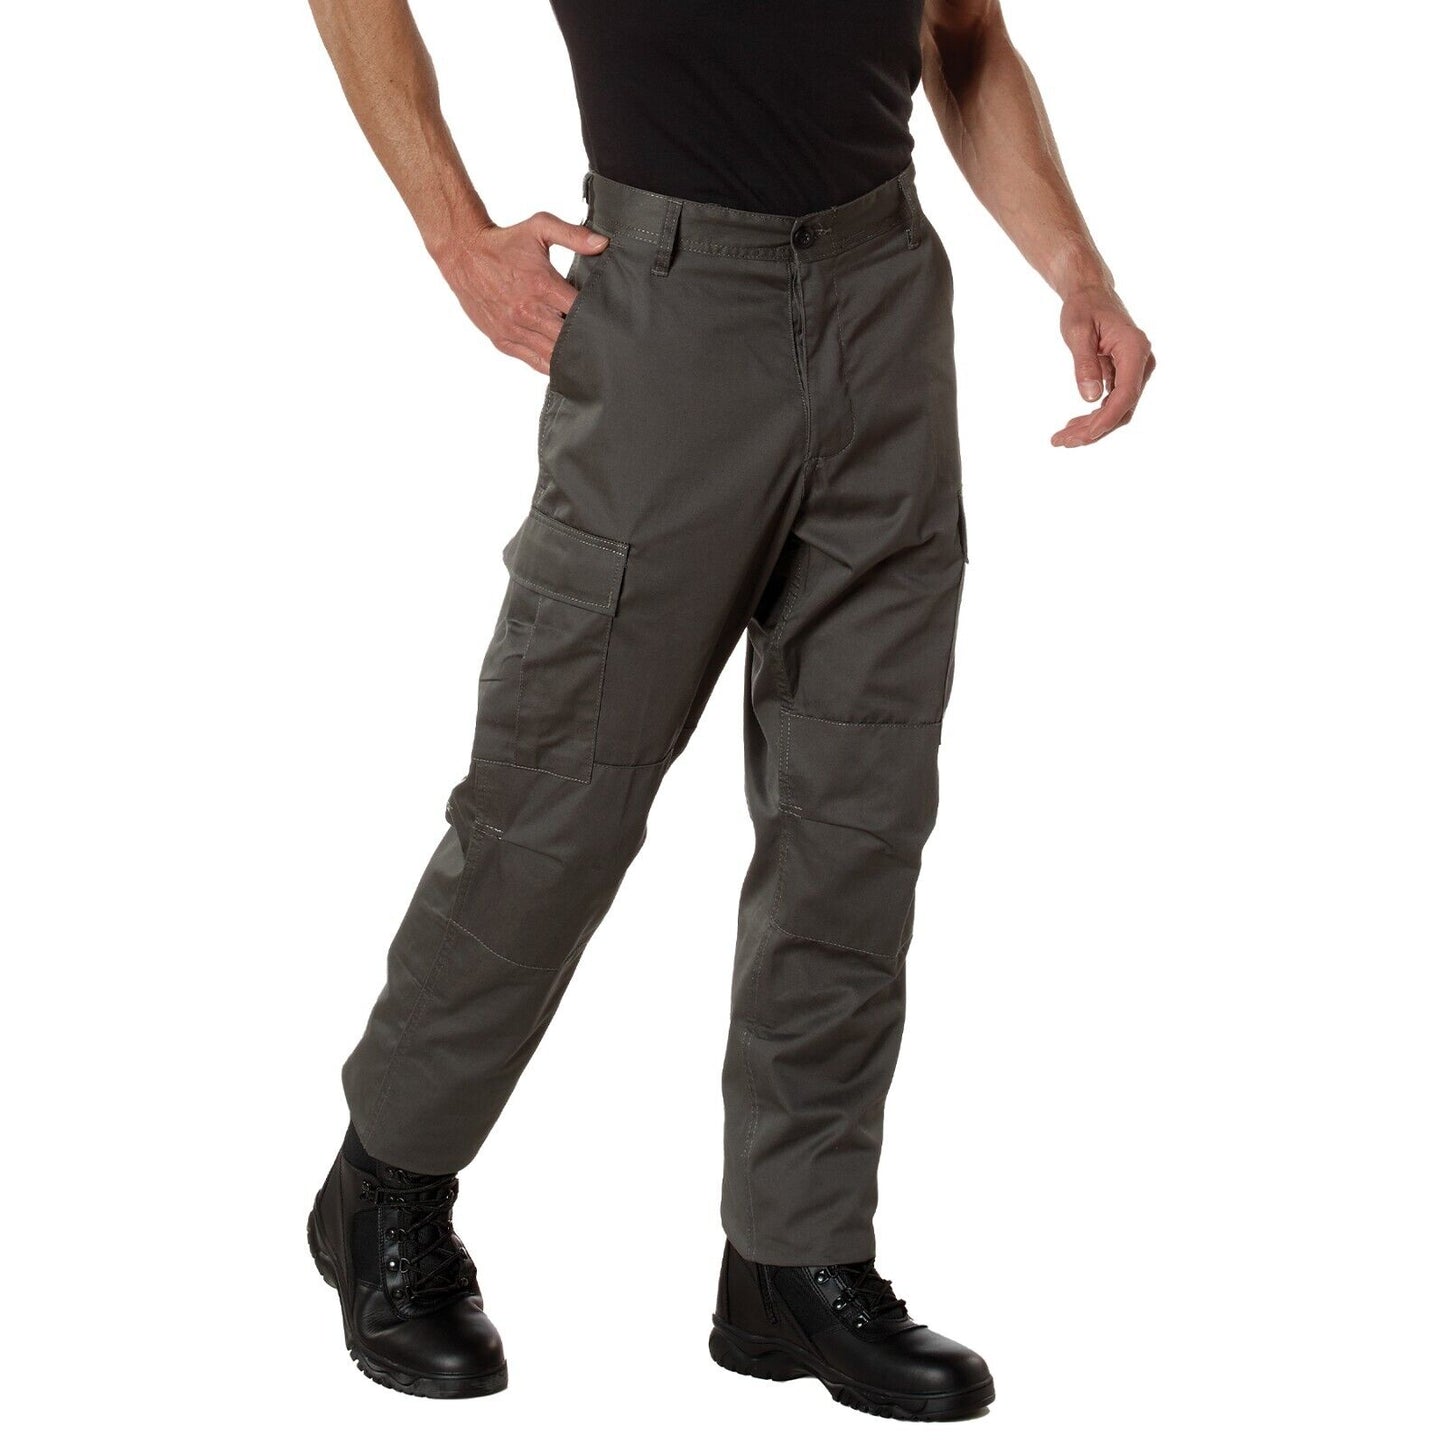 Men's Charcoal Grey BDU Pants - Rothco Tactical Cargo Fatigues